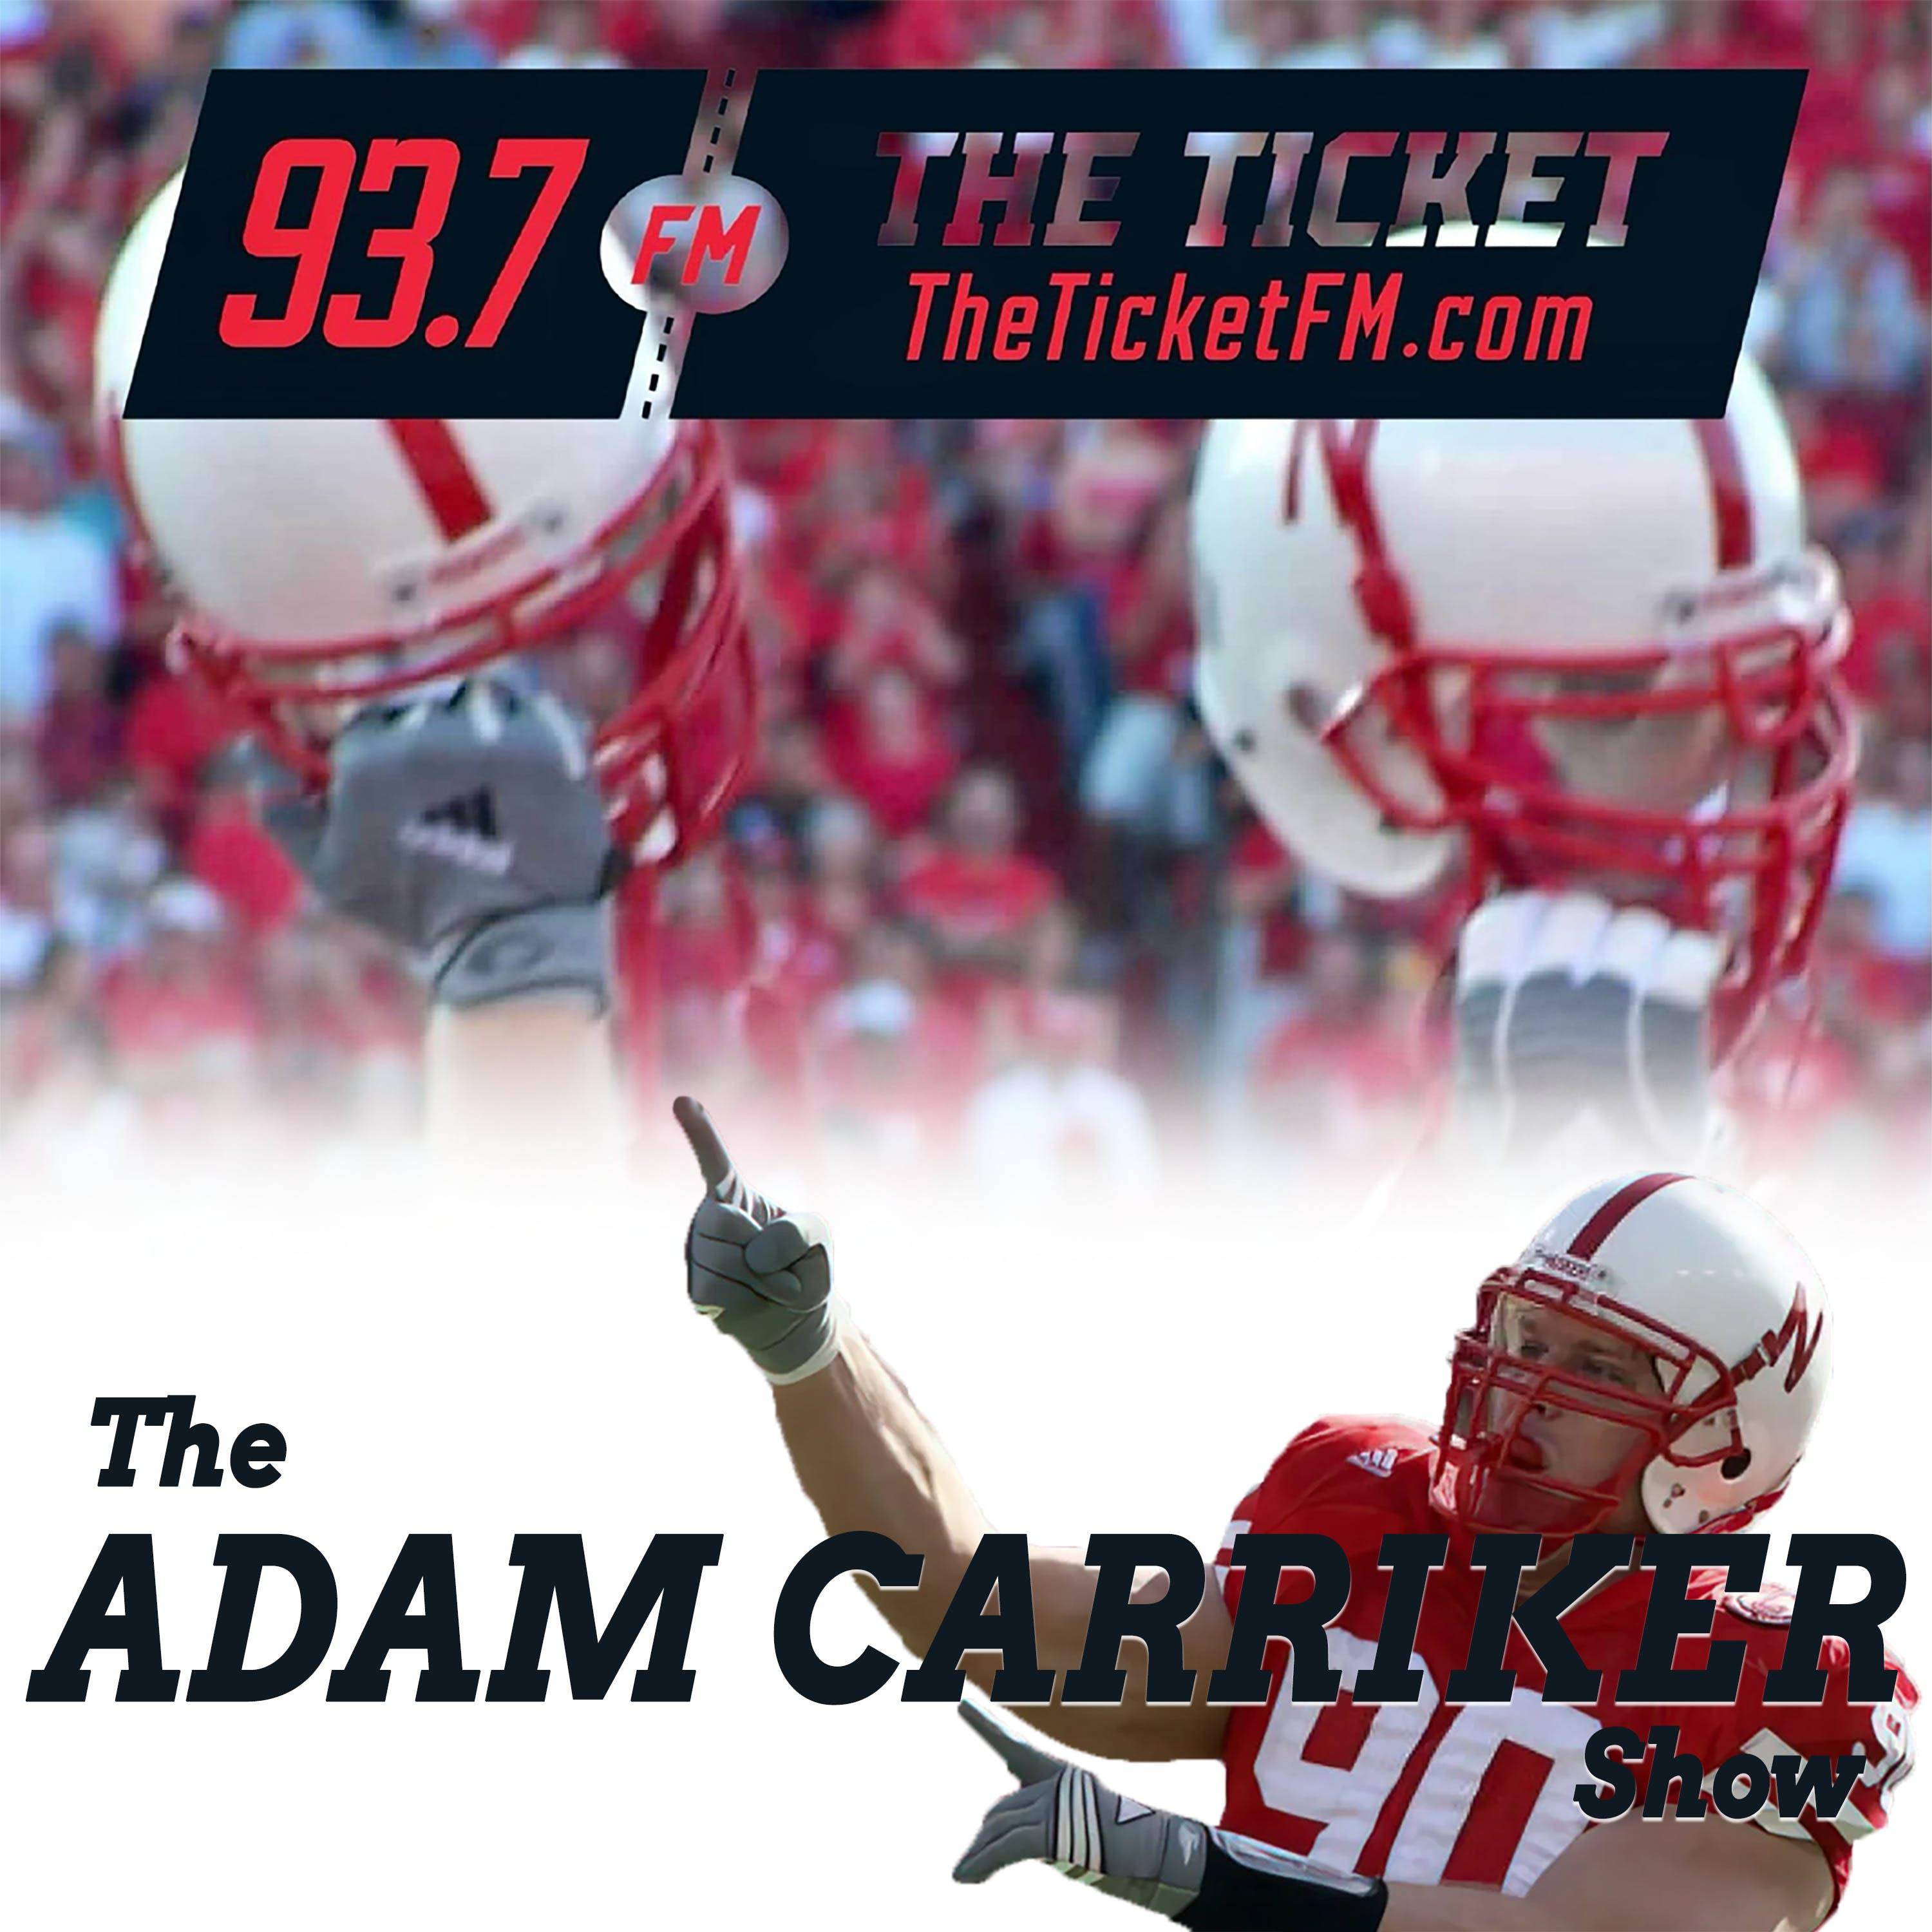 The Adam Carriker Show – 93.7 The Ticket KNTK